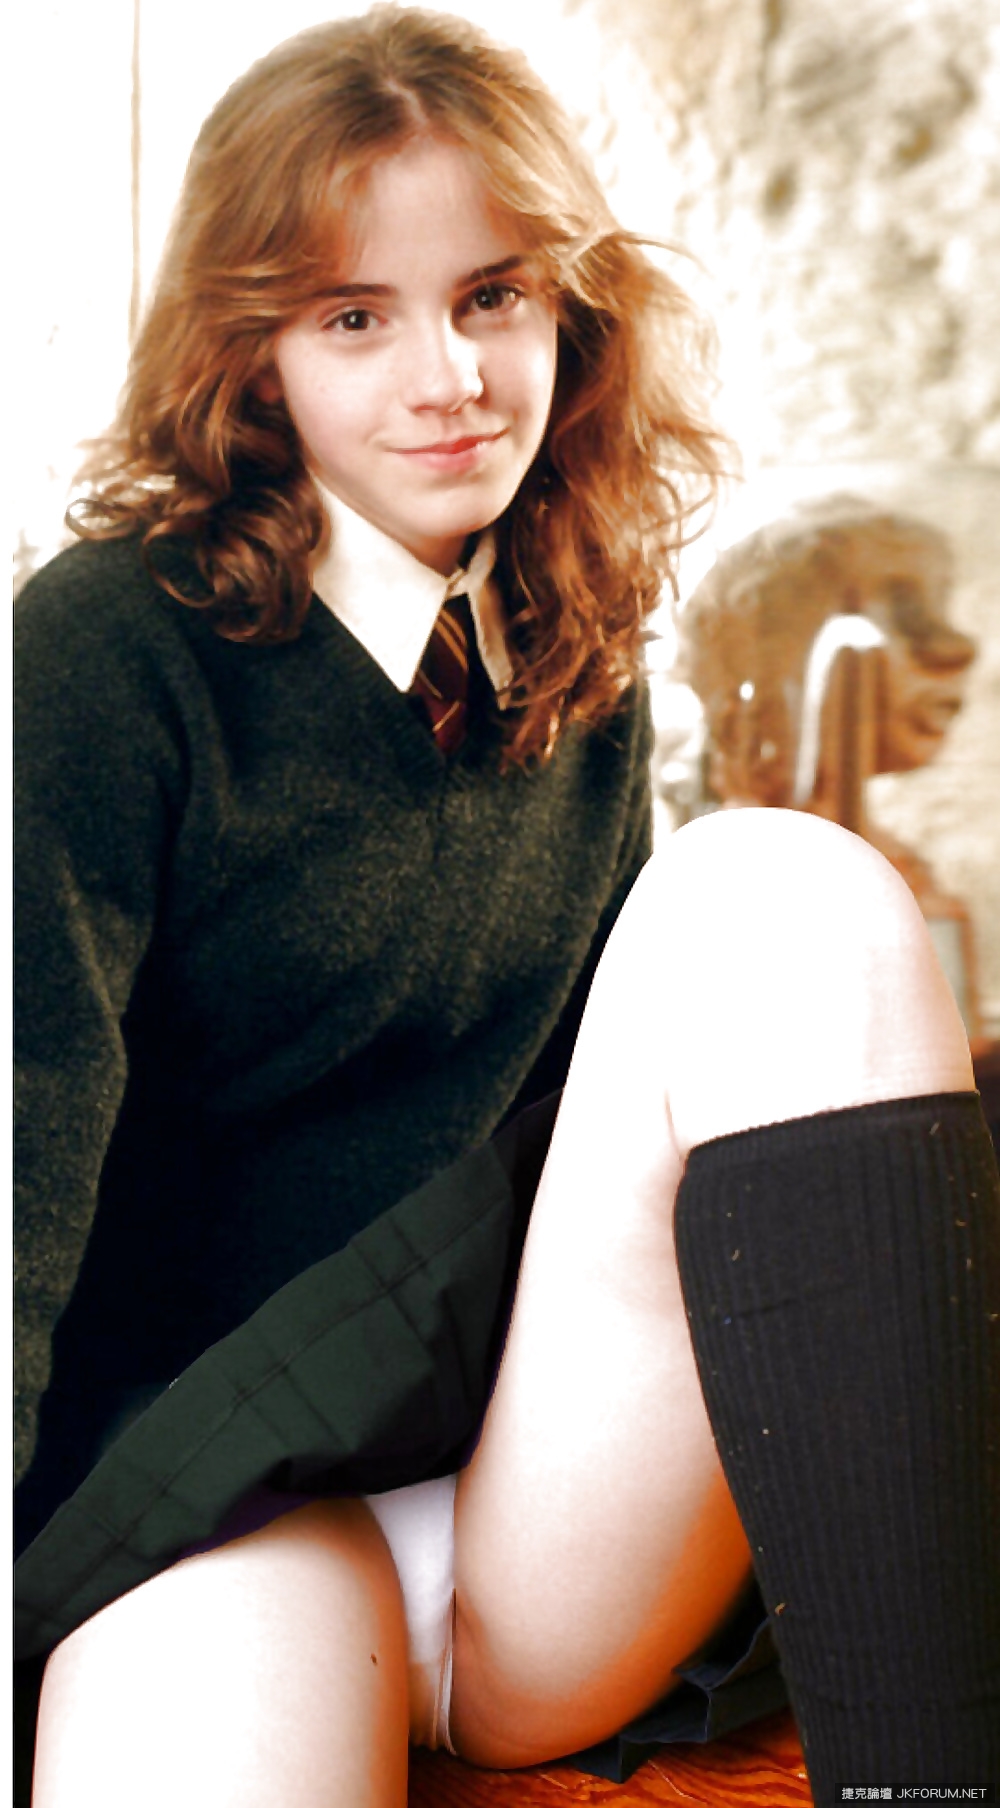 Hermione granger upskirt